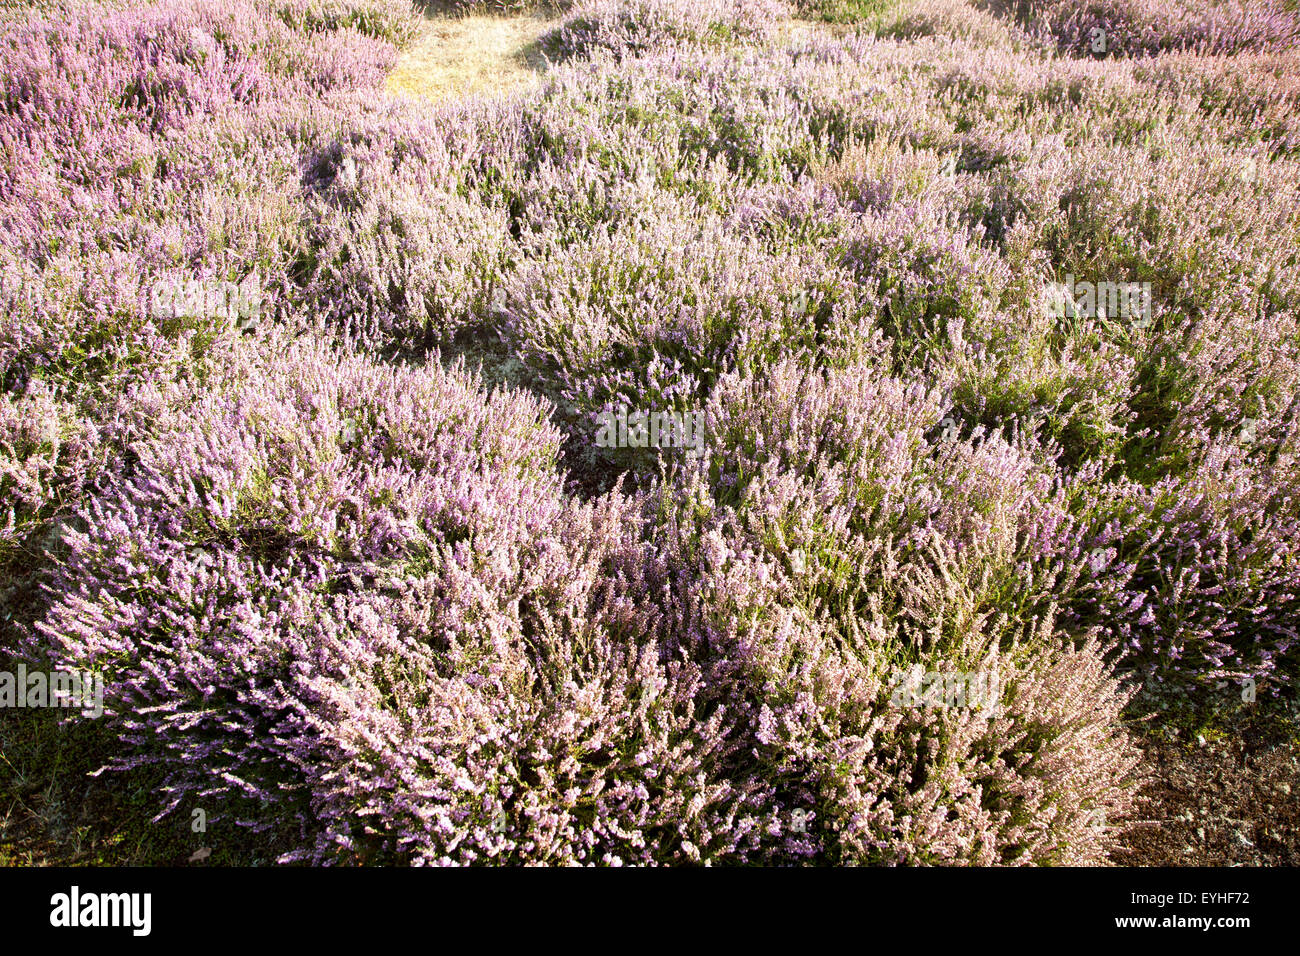 Purple flowering heather plants growing on heathland in summer, Shottisham, Suffolk, England, UK Stock Photo